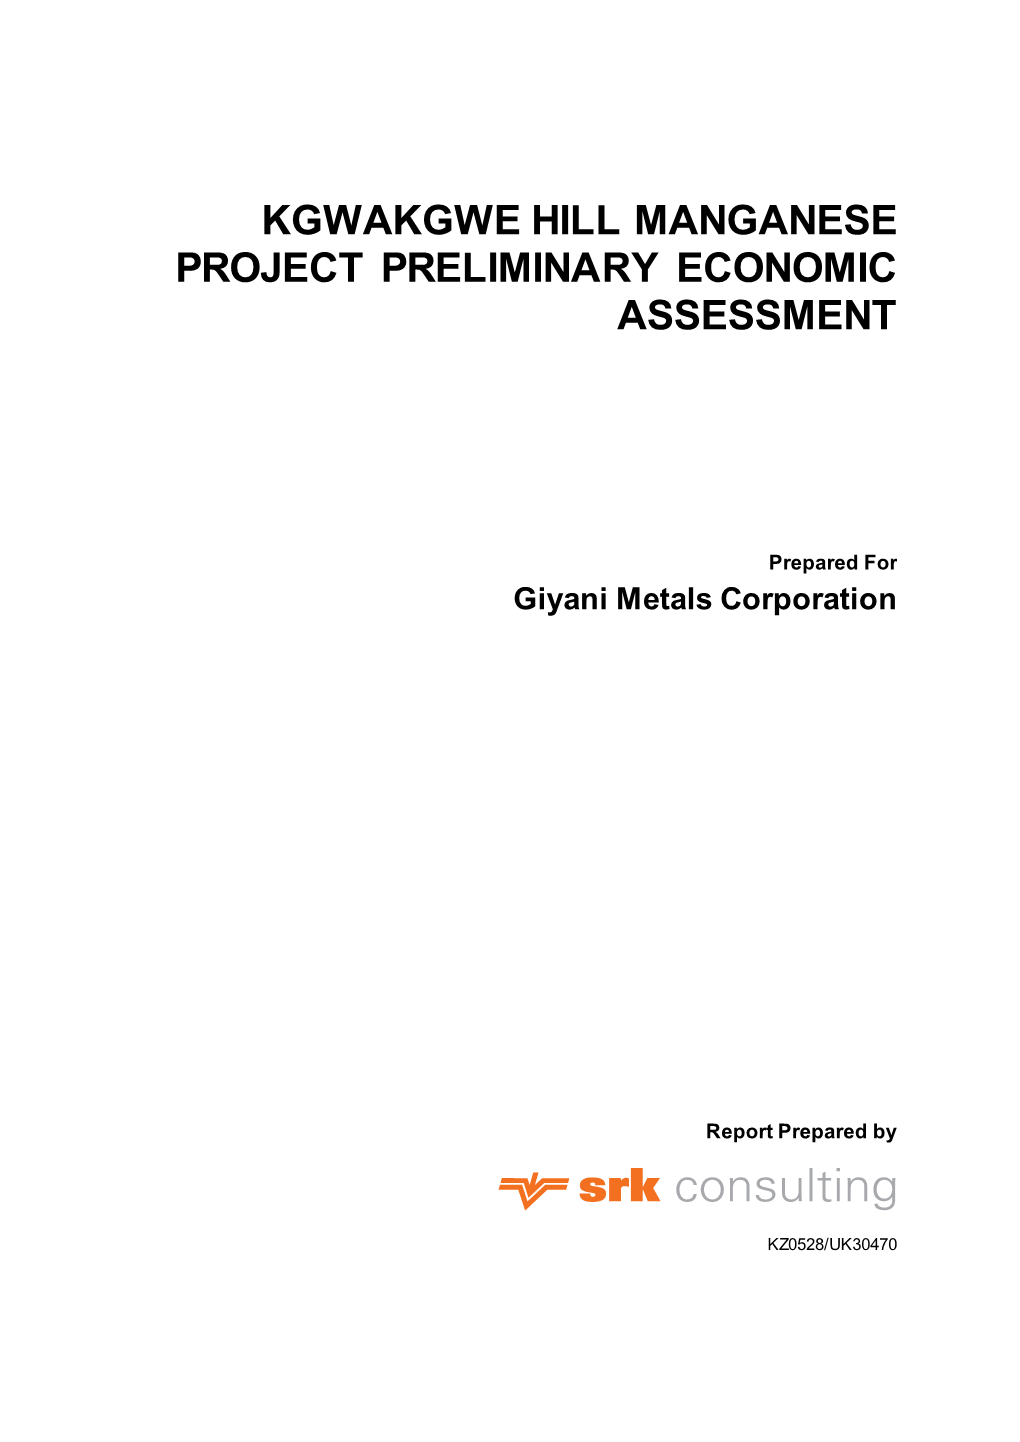 Kgwakgwe Hill Manganese Project Preliminary Economic Assessment